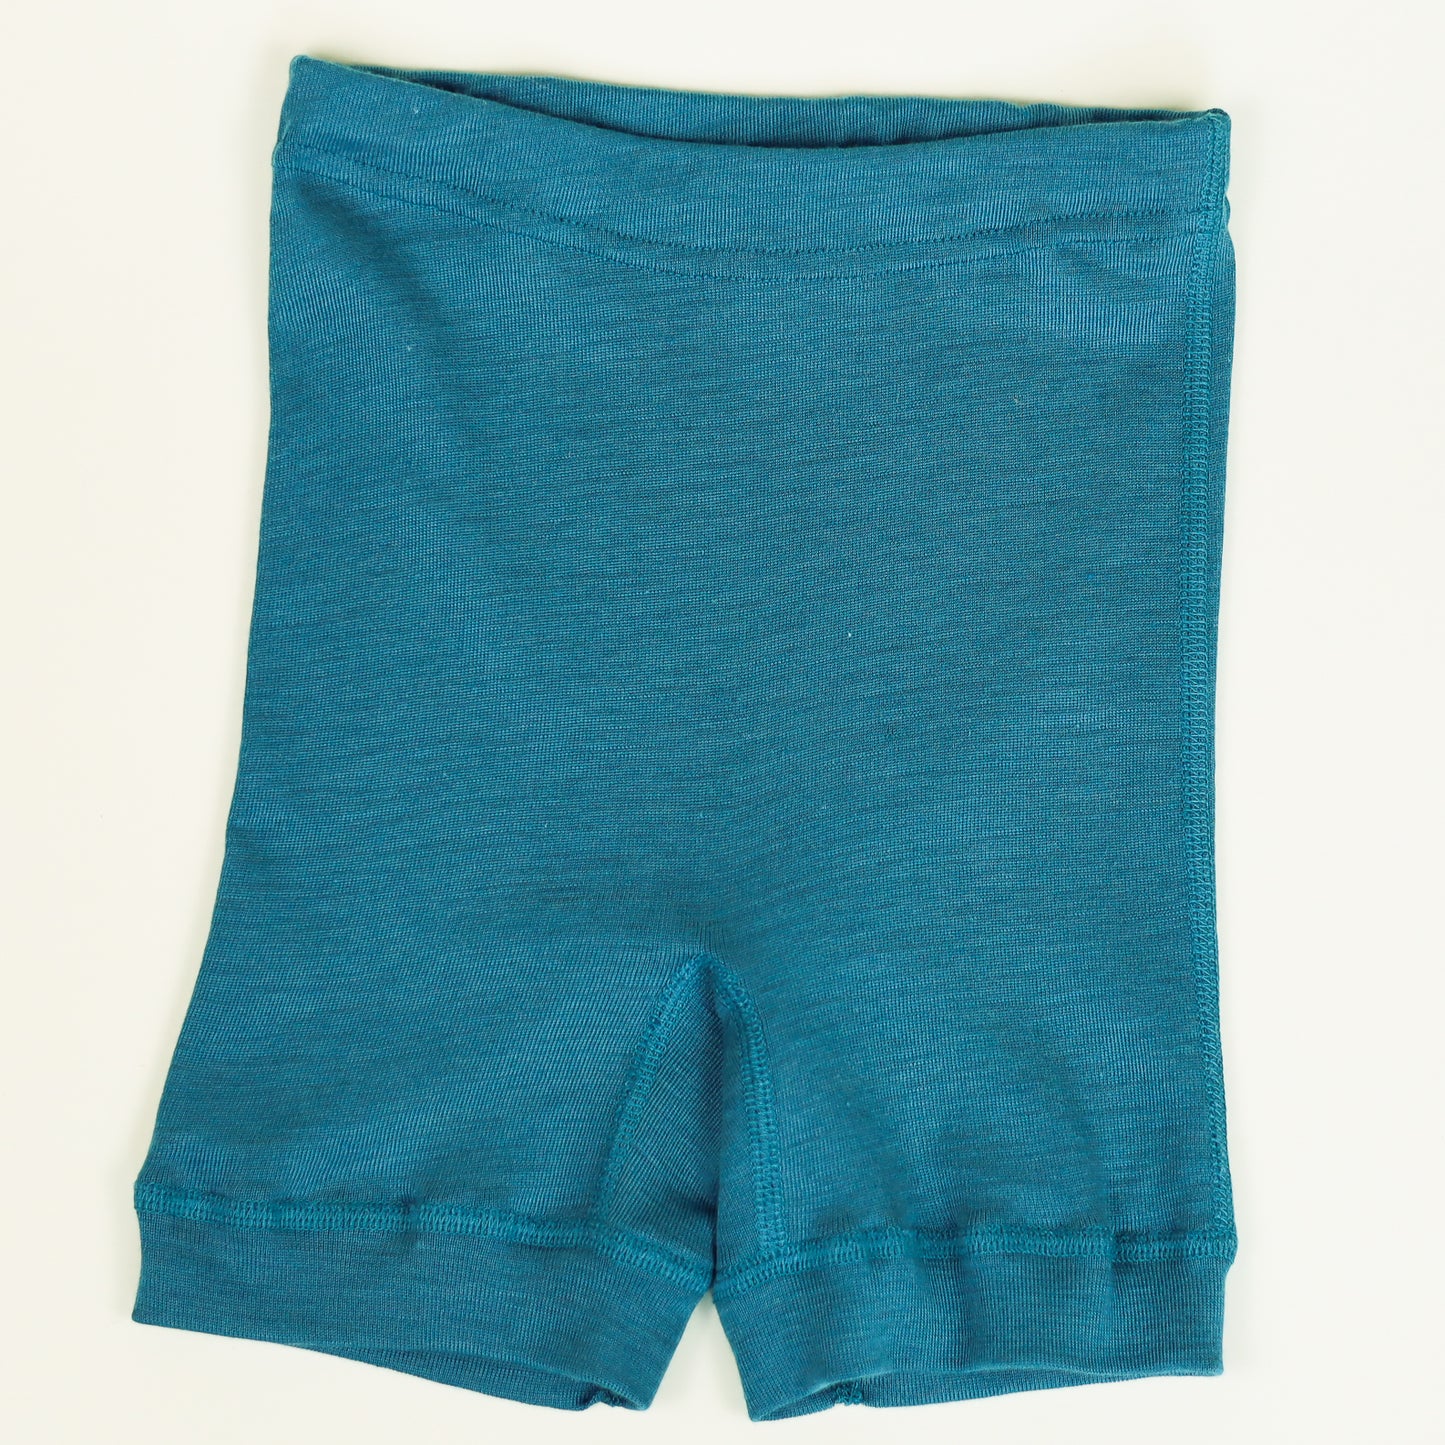 Hocosa Toddler Bermuda Shorts, Wool/Silk – Warmth and Weather